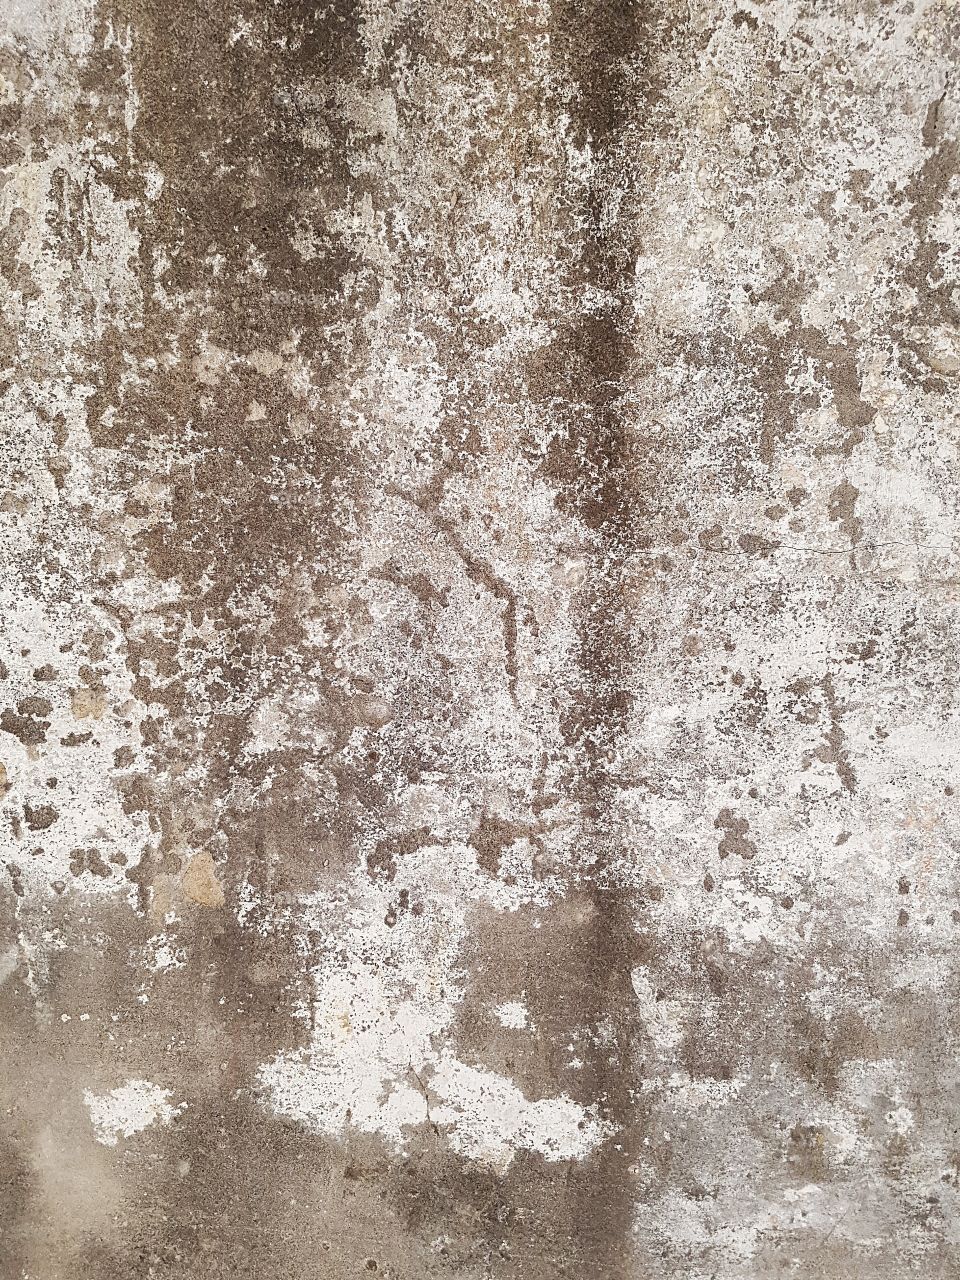 Prison wall concrete texture - 188